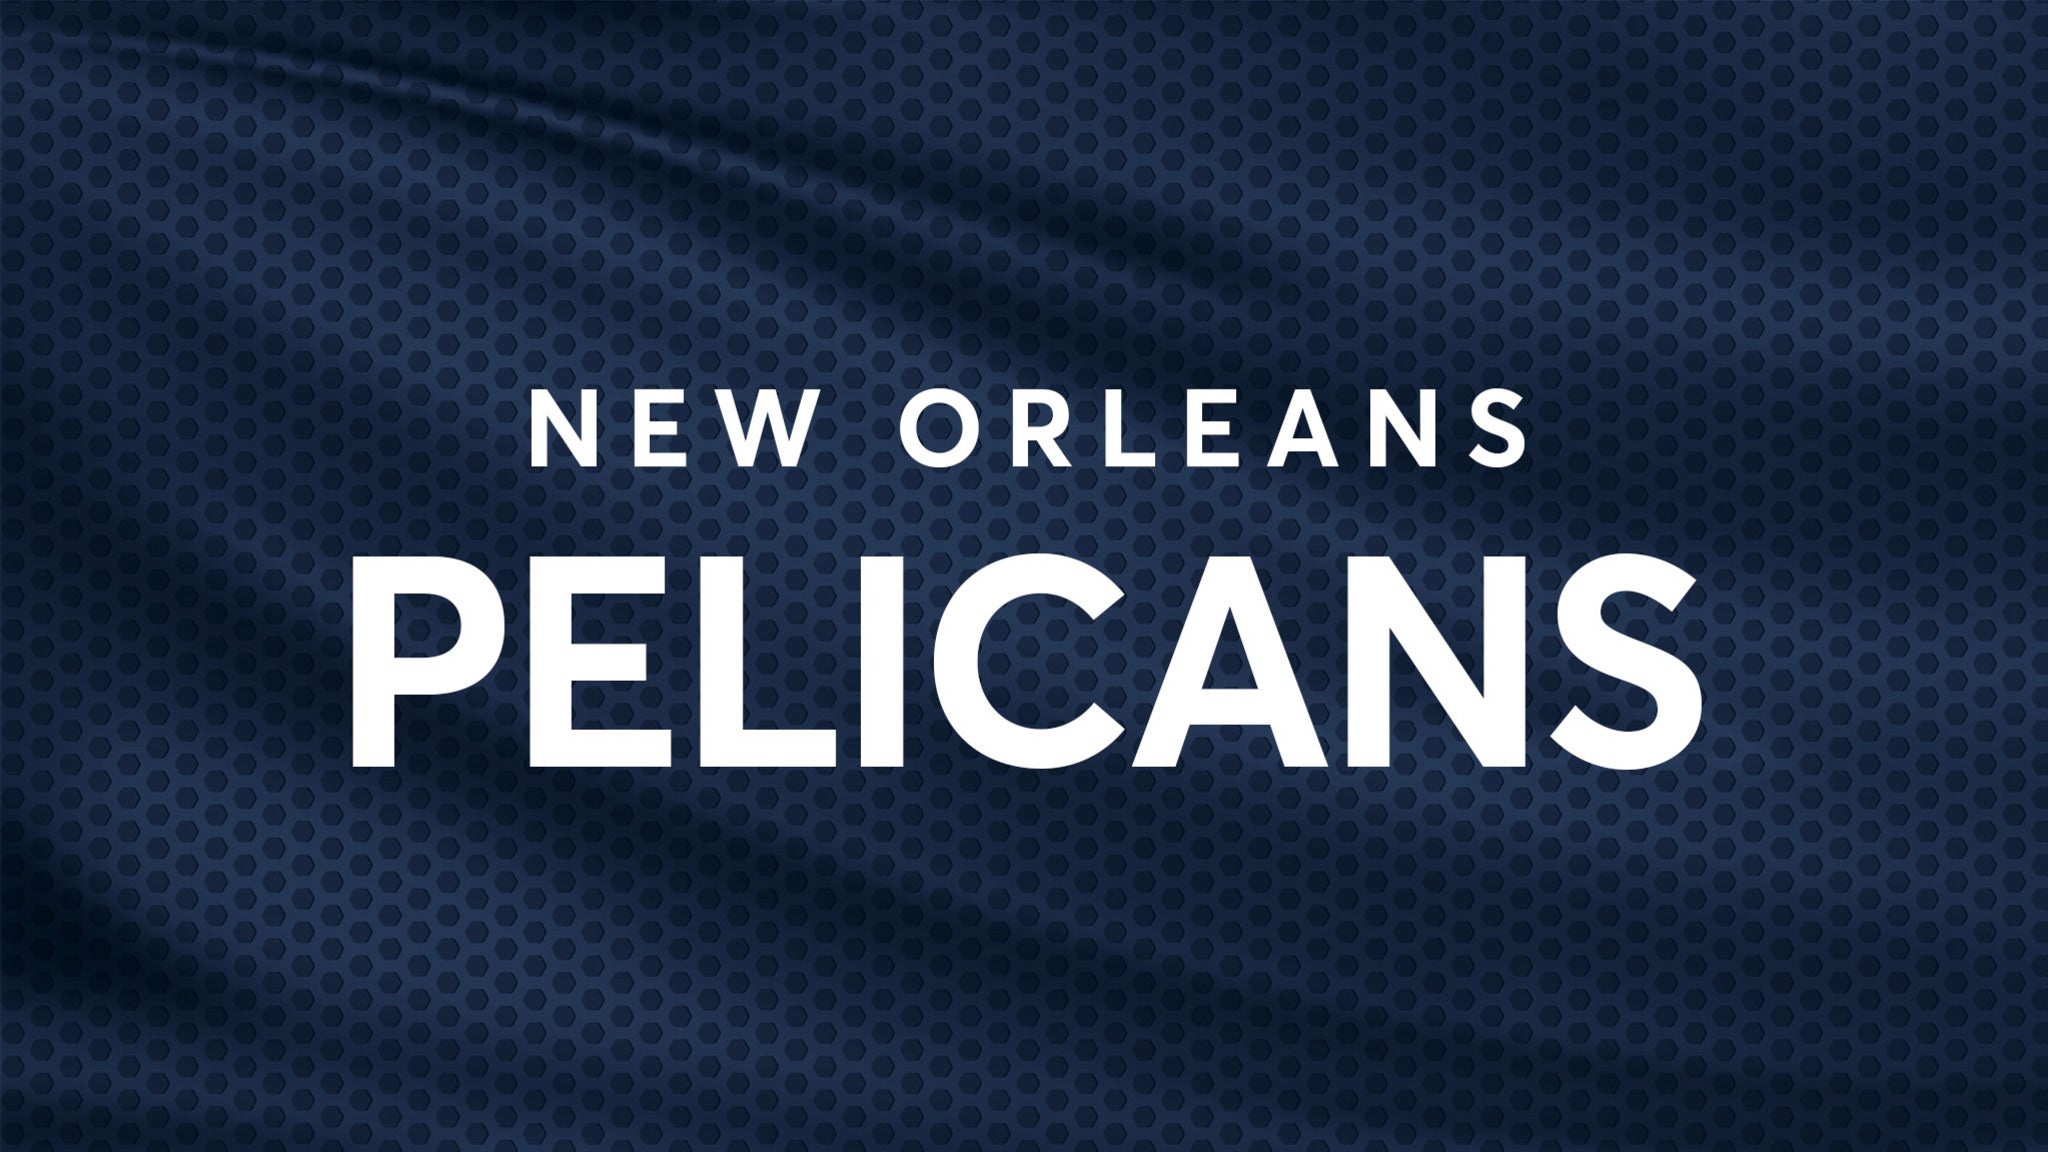 New Orleans Pelicans vs. Oklahoma City Thunder